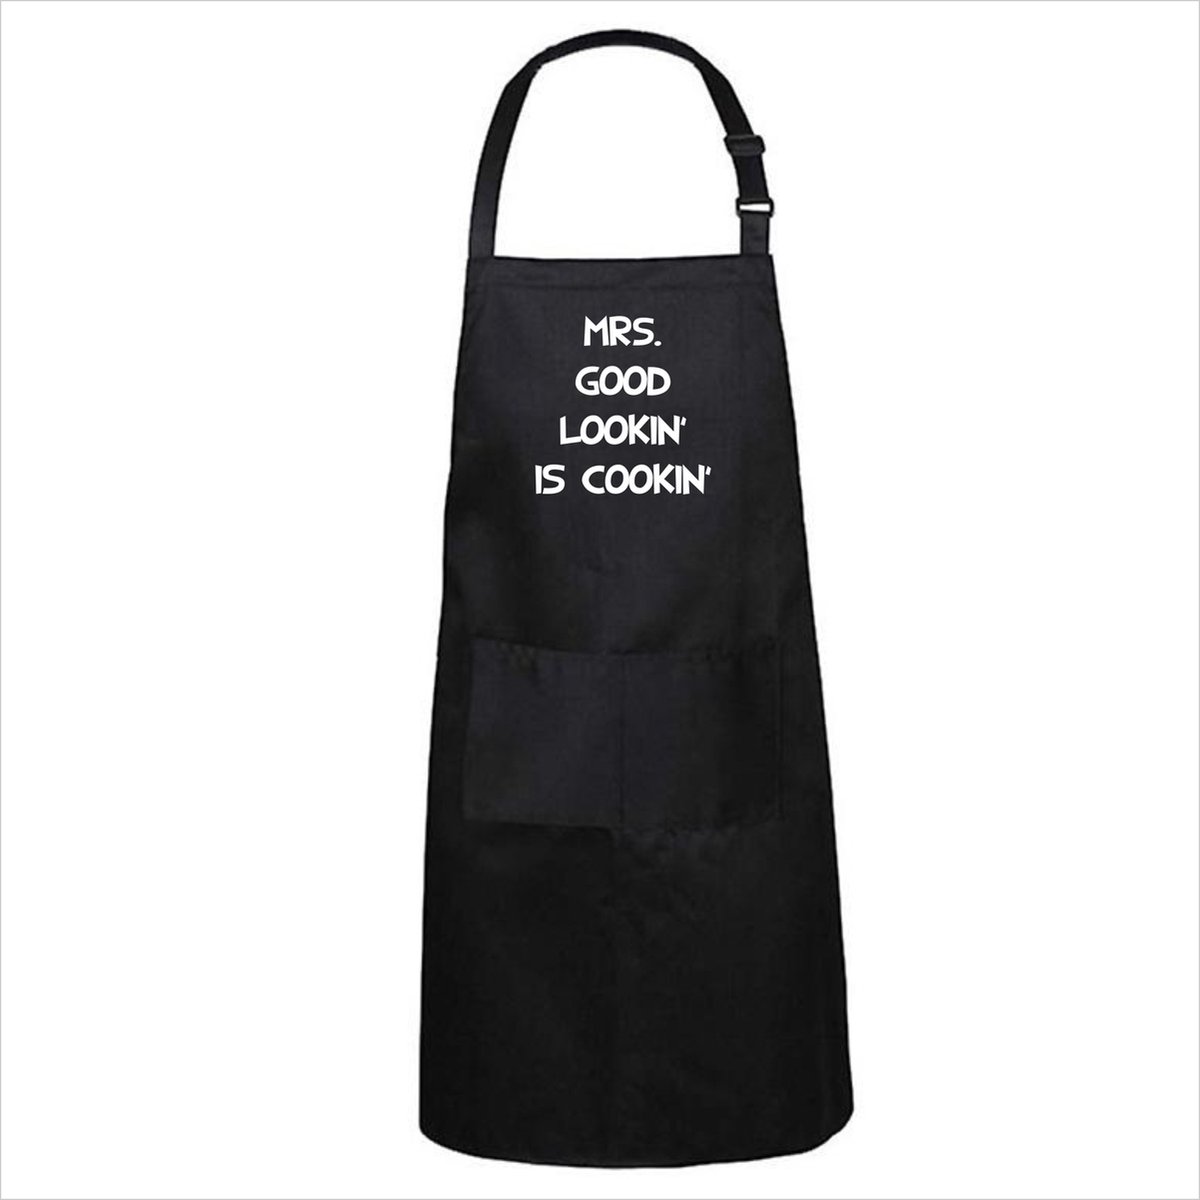 Keukenschort Mrs. Good Lookin' is Cookin' - One Size - Zwart - moederdag cadeau - mama cadeau - cadeau voor haar - cadeau voor vriendin - keukenschort met tekst